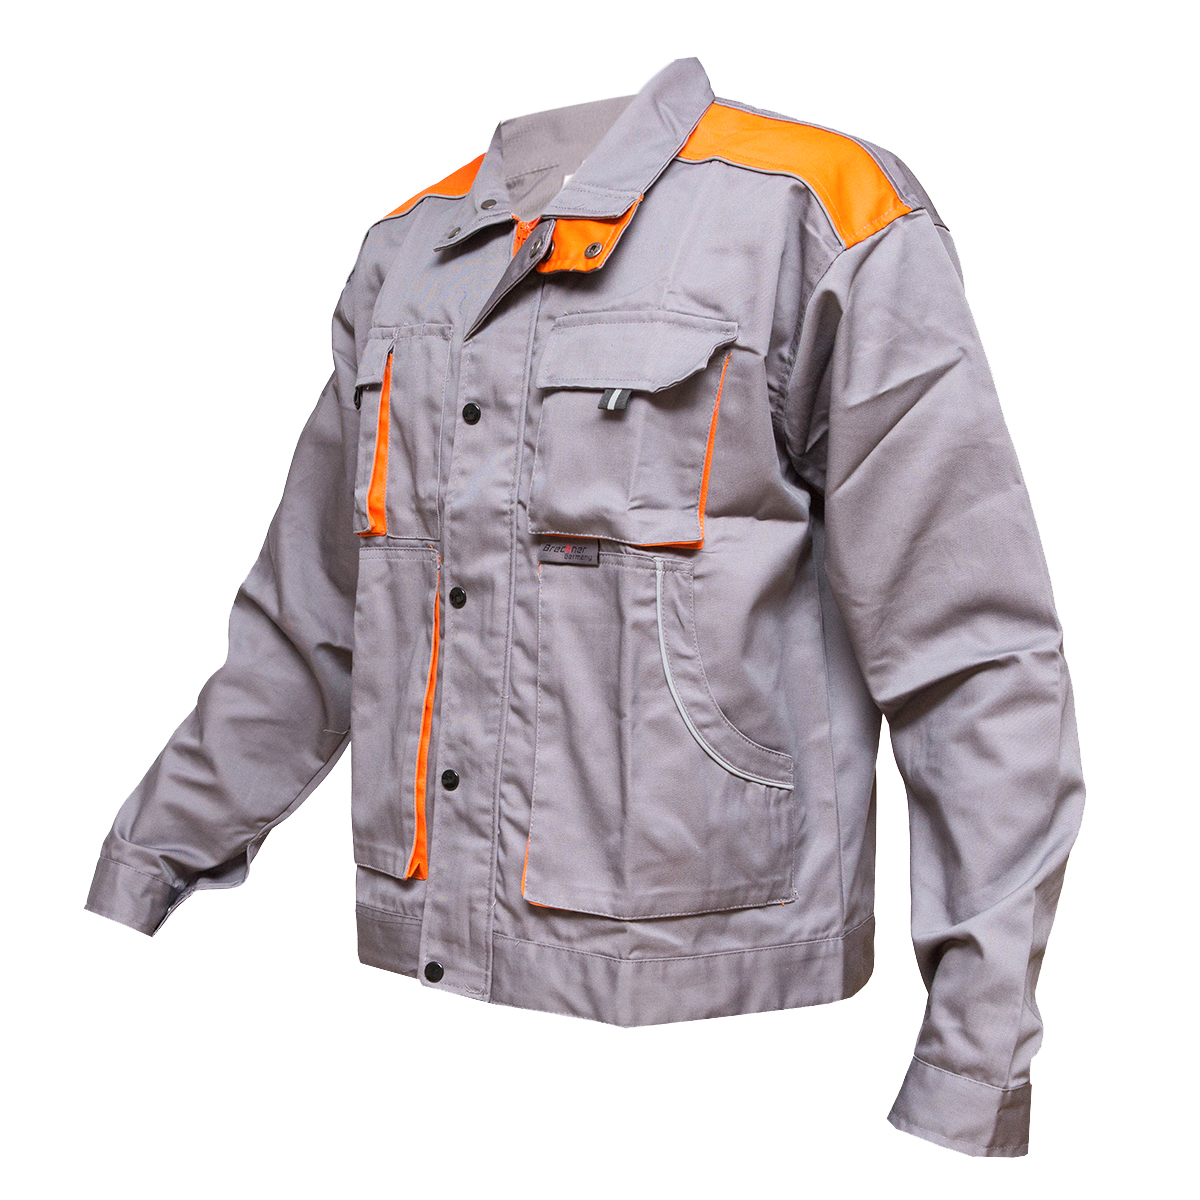 Jacheta de lucru poliester cu bumbac, gri/portocaliu marimea 62, 235g/m2 Breckner Germany